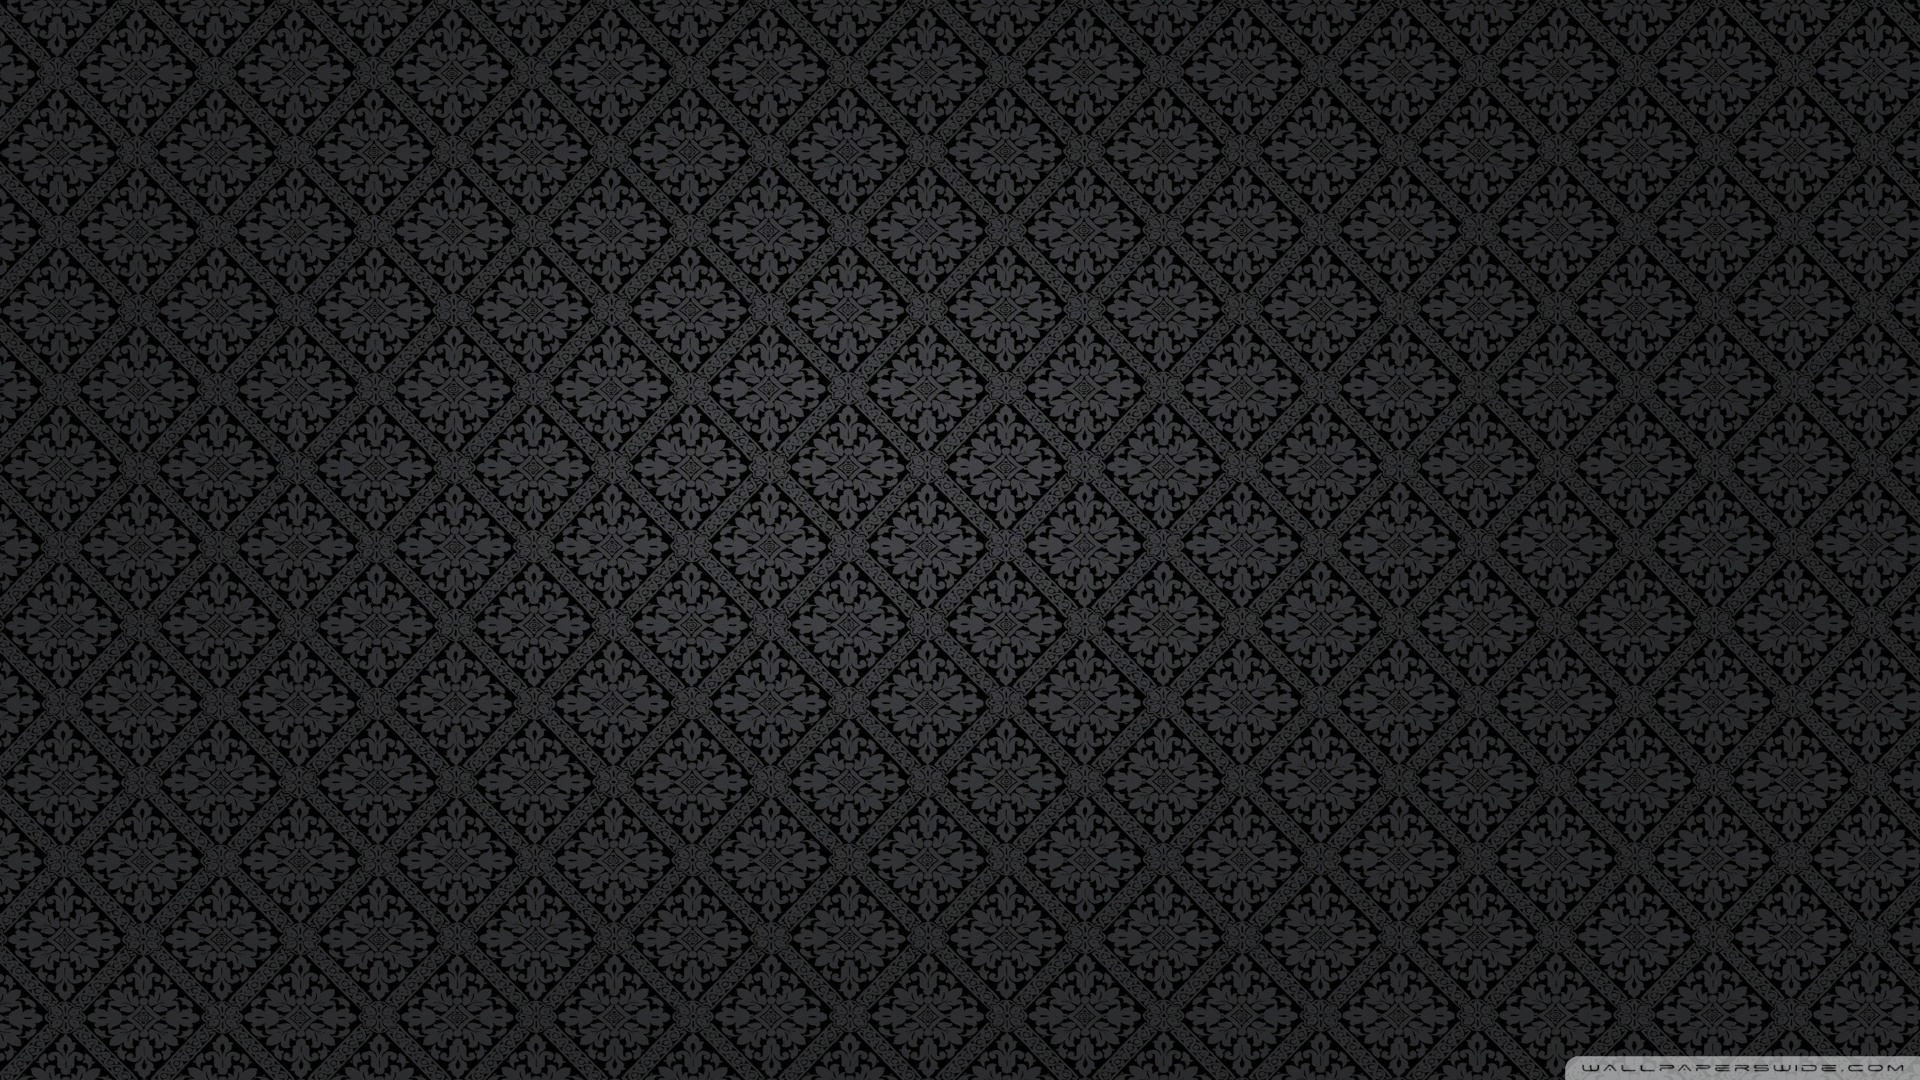 Free download wallpaper pattern white black patterns images 1920x1080